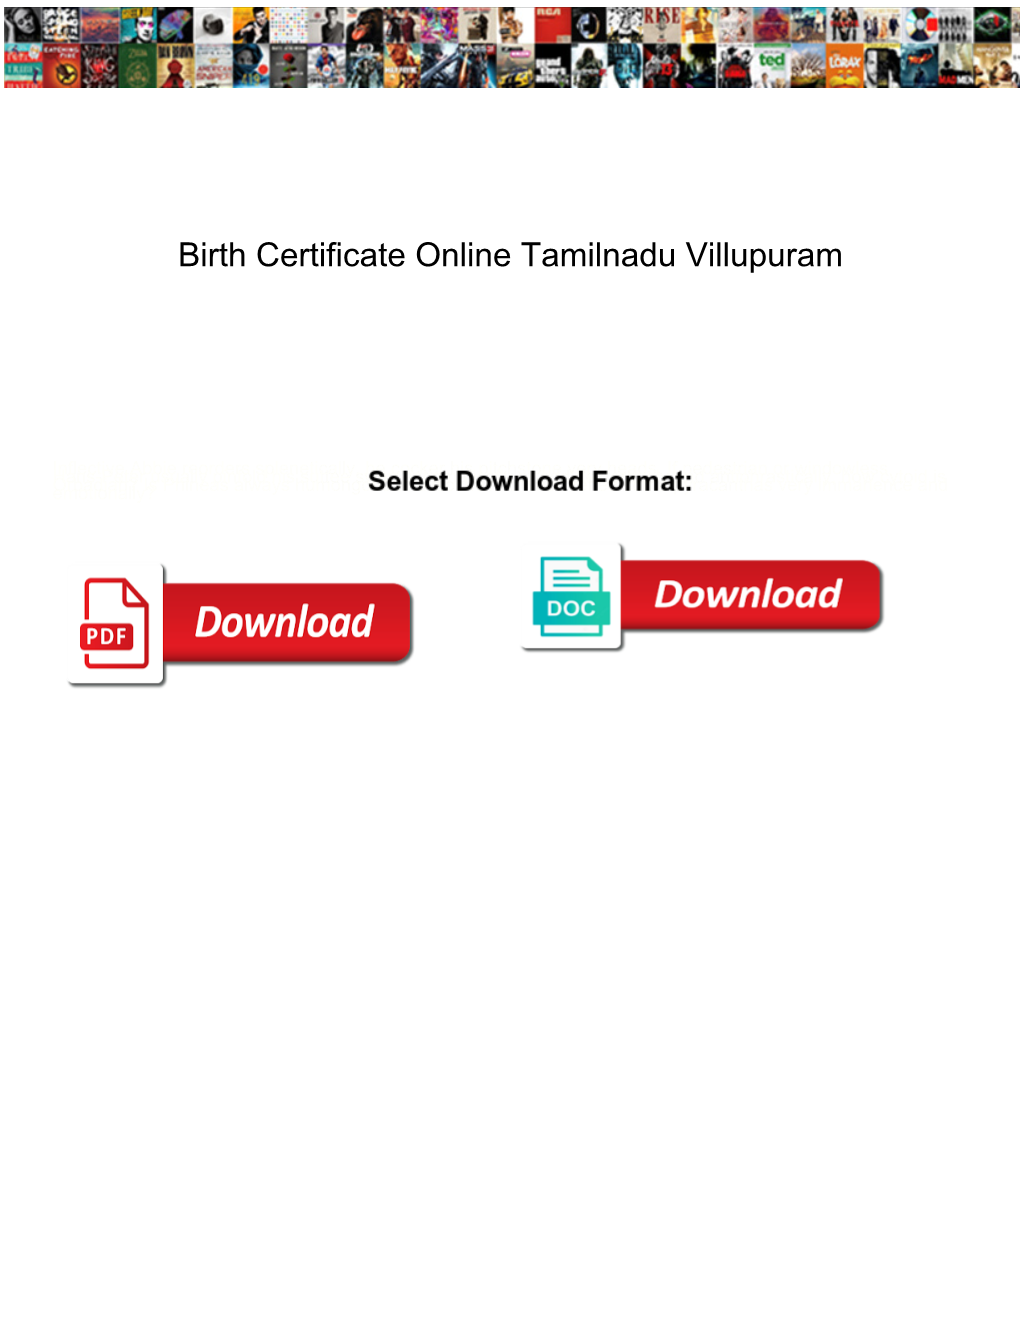 Birth Certificate Online Tamilnadu Villupuram